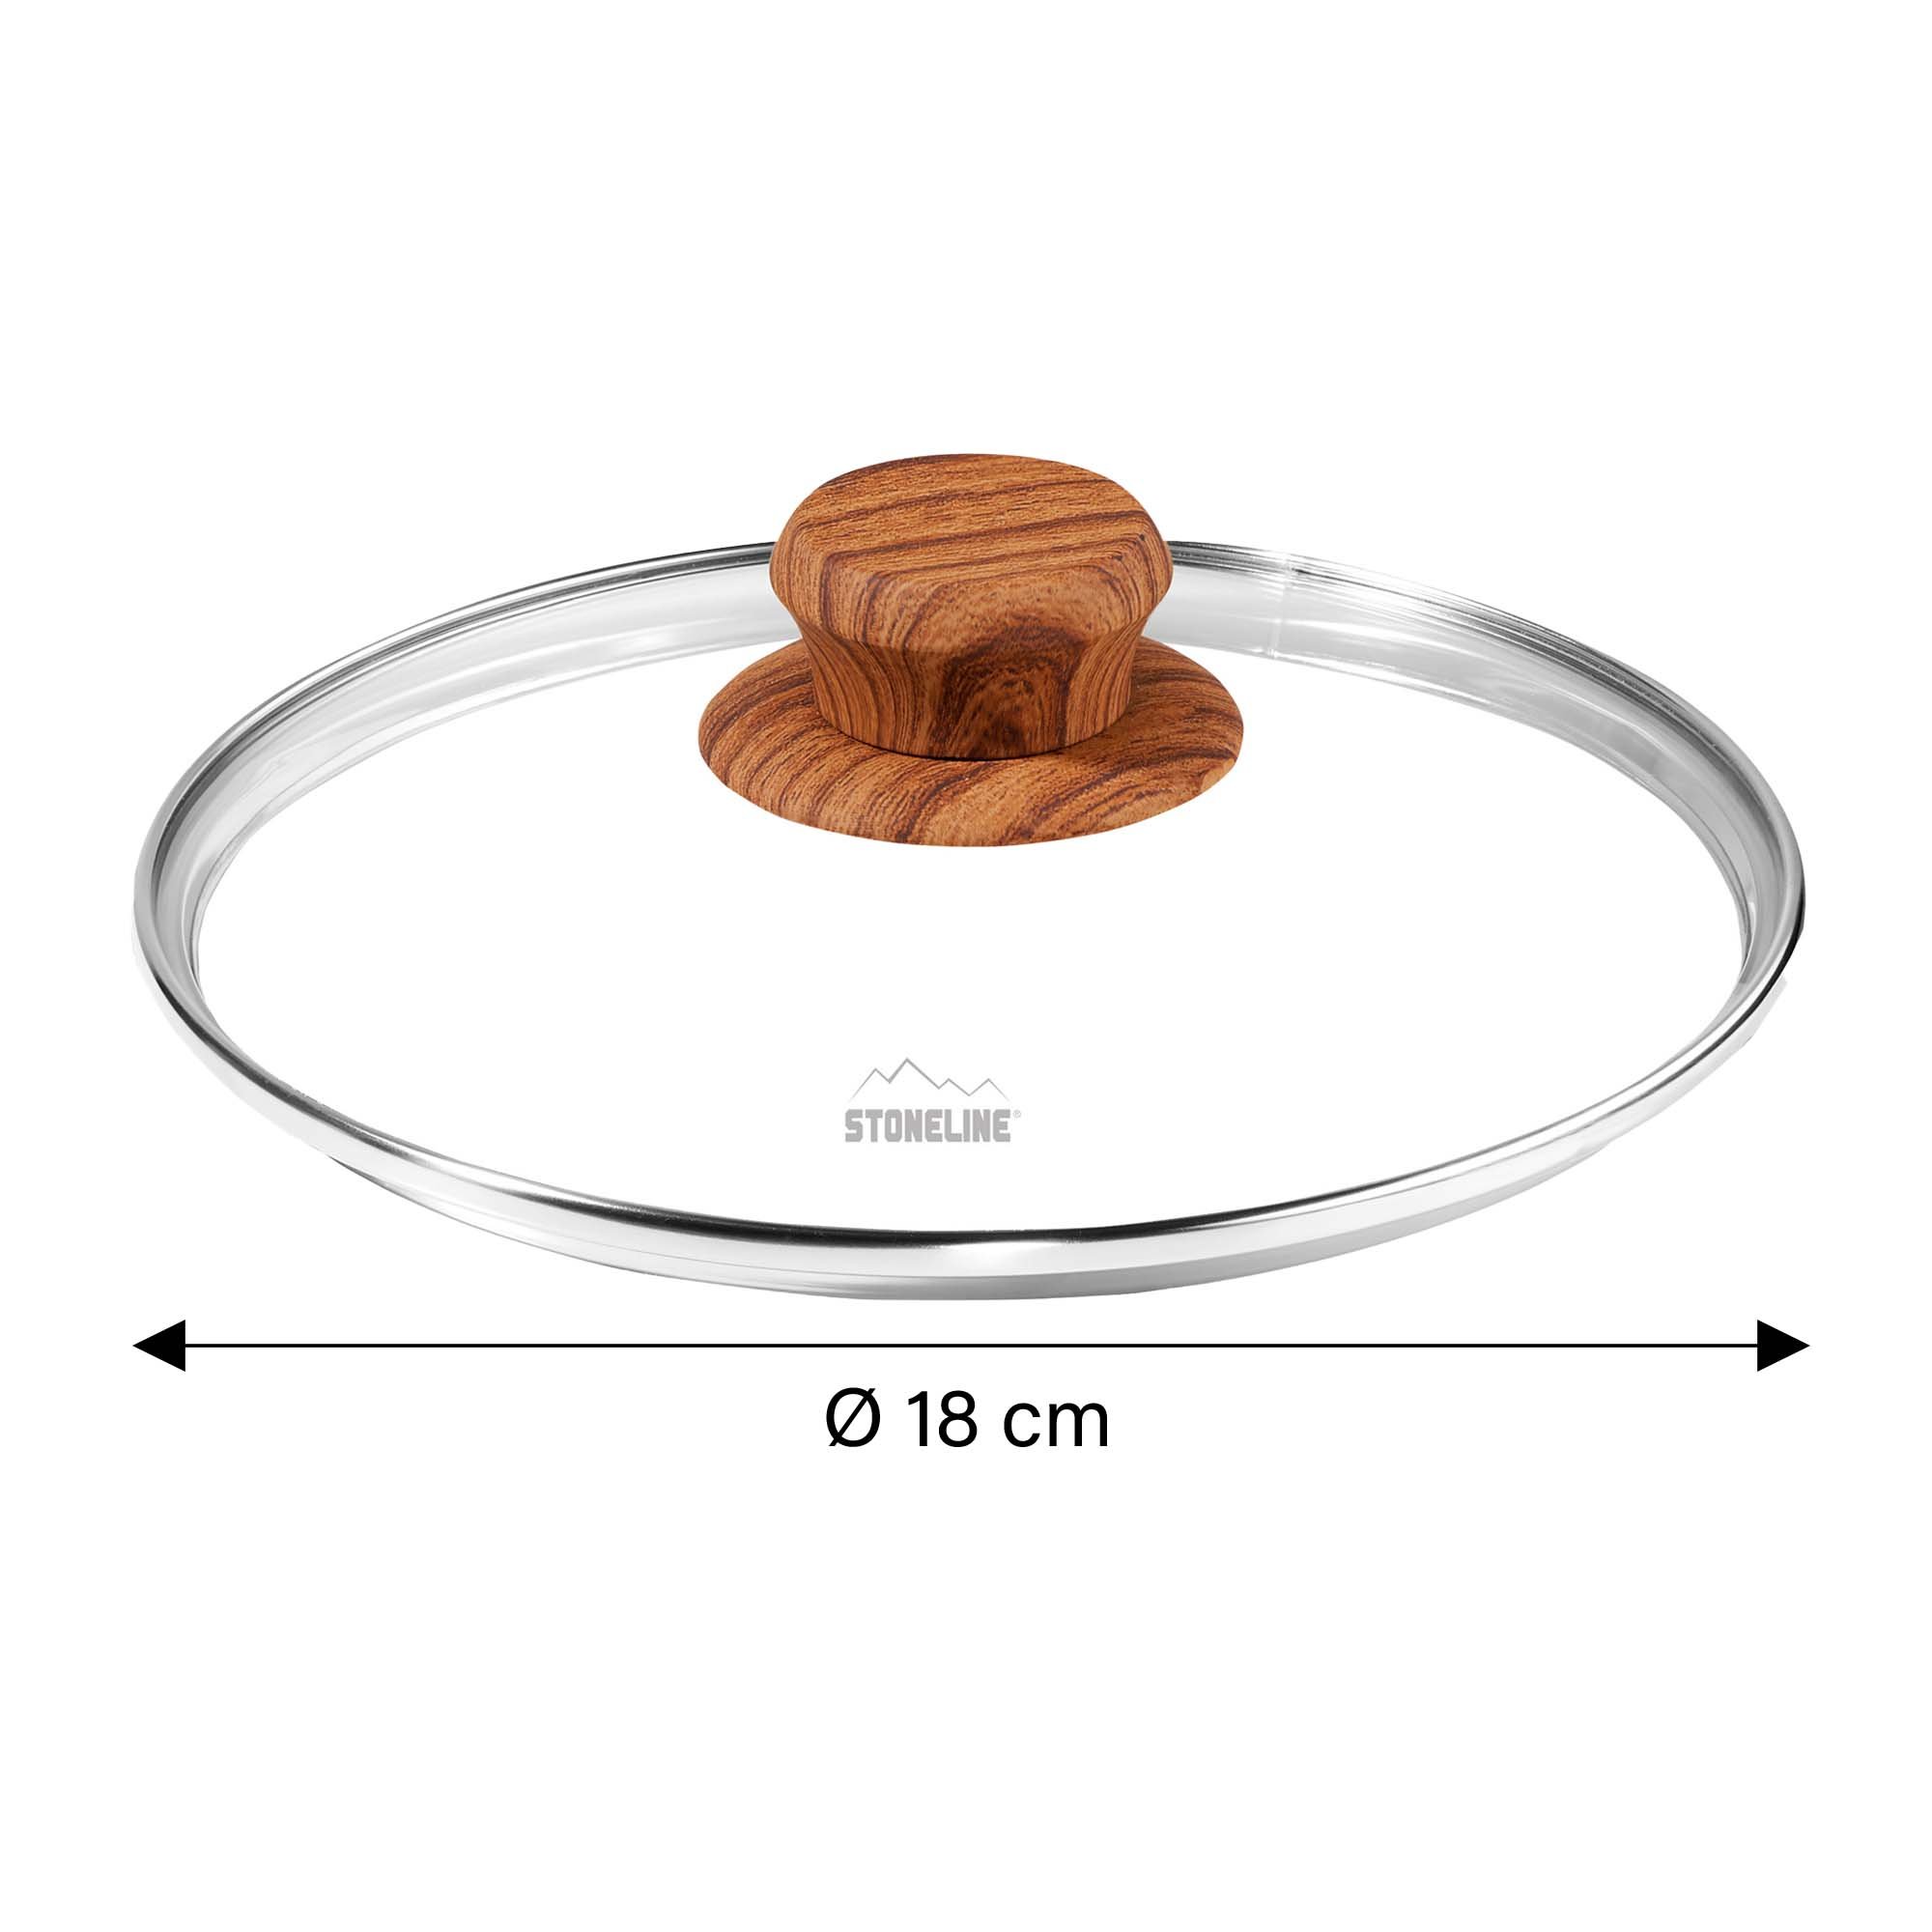 STONELINE® 18 cm glass lid, with wood-look knob